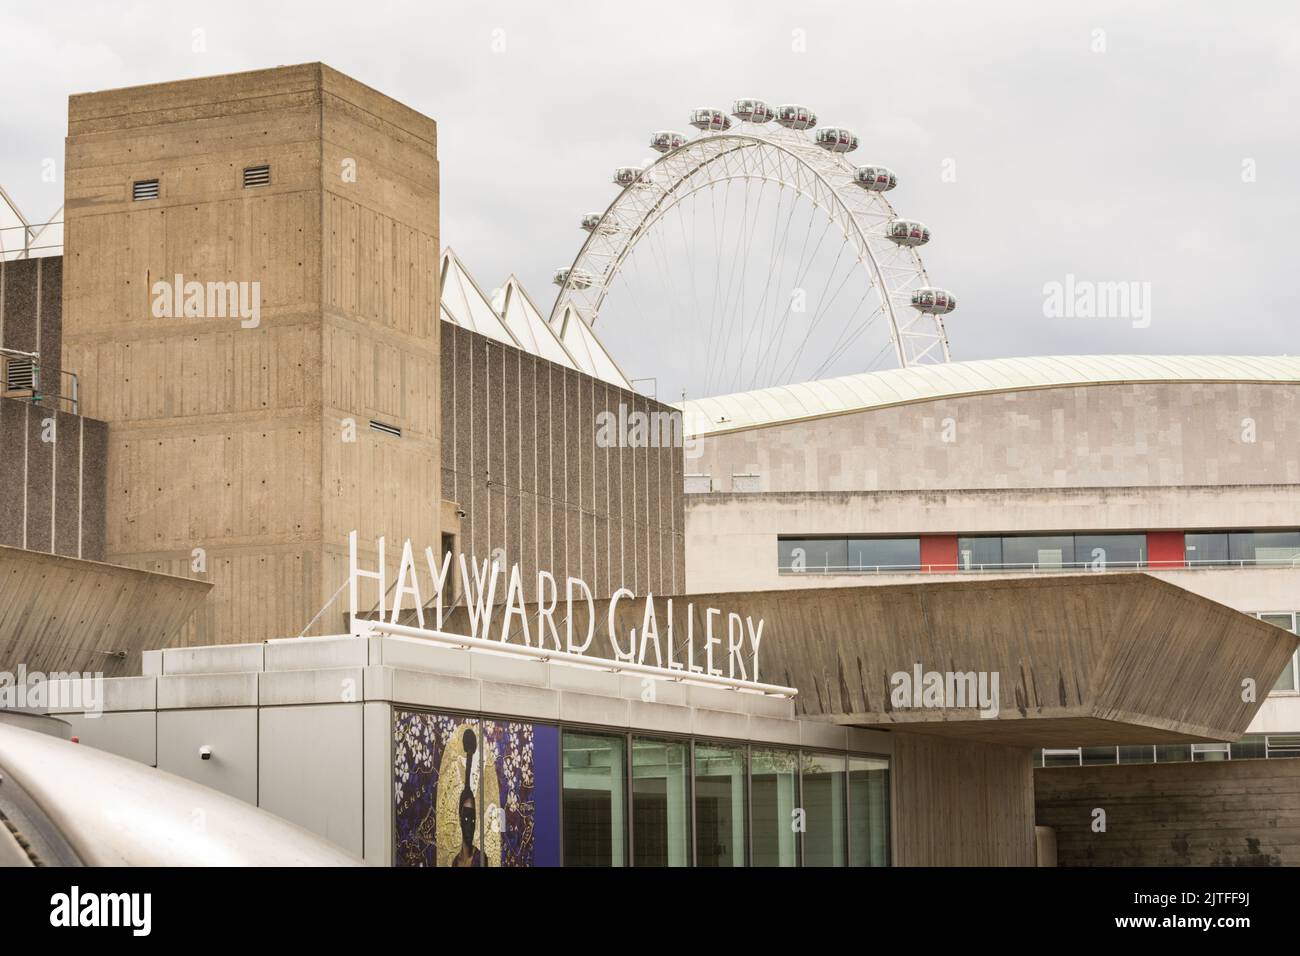 The Hayward Gallery and the Millenium Wheel (London Eye), Southbank Centre, Belvedere Road, Londres, SE1, REINO UNIDO Foto de stock